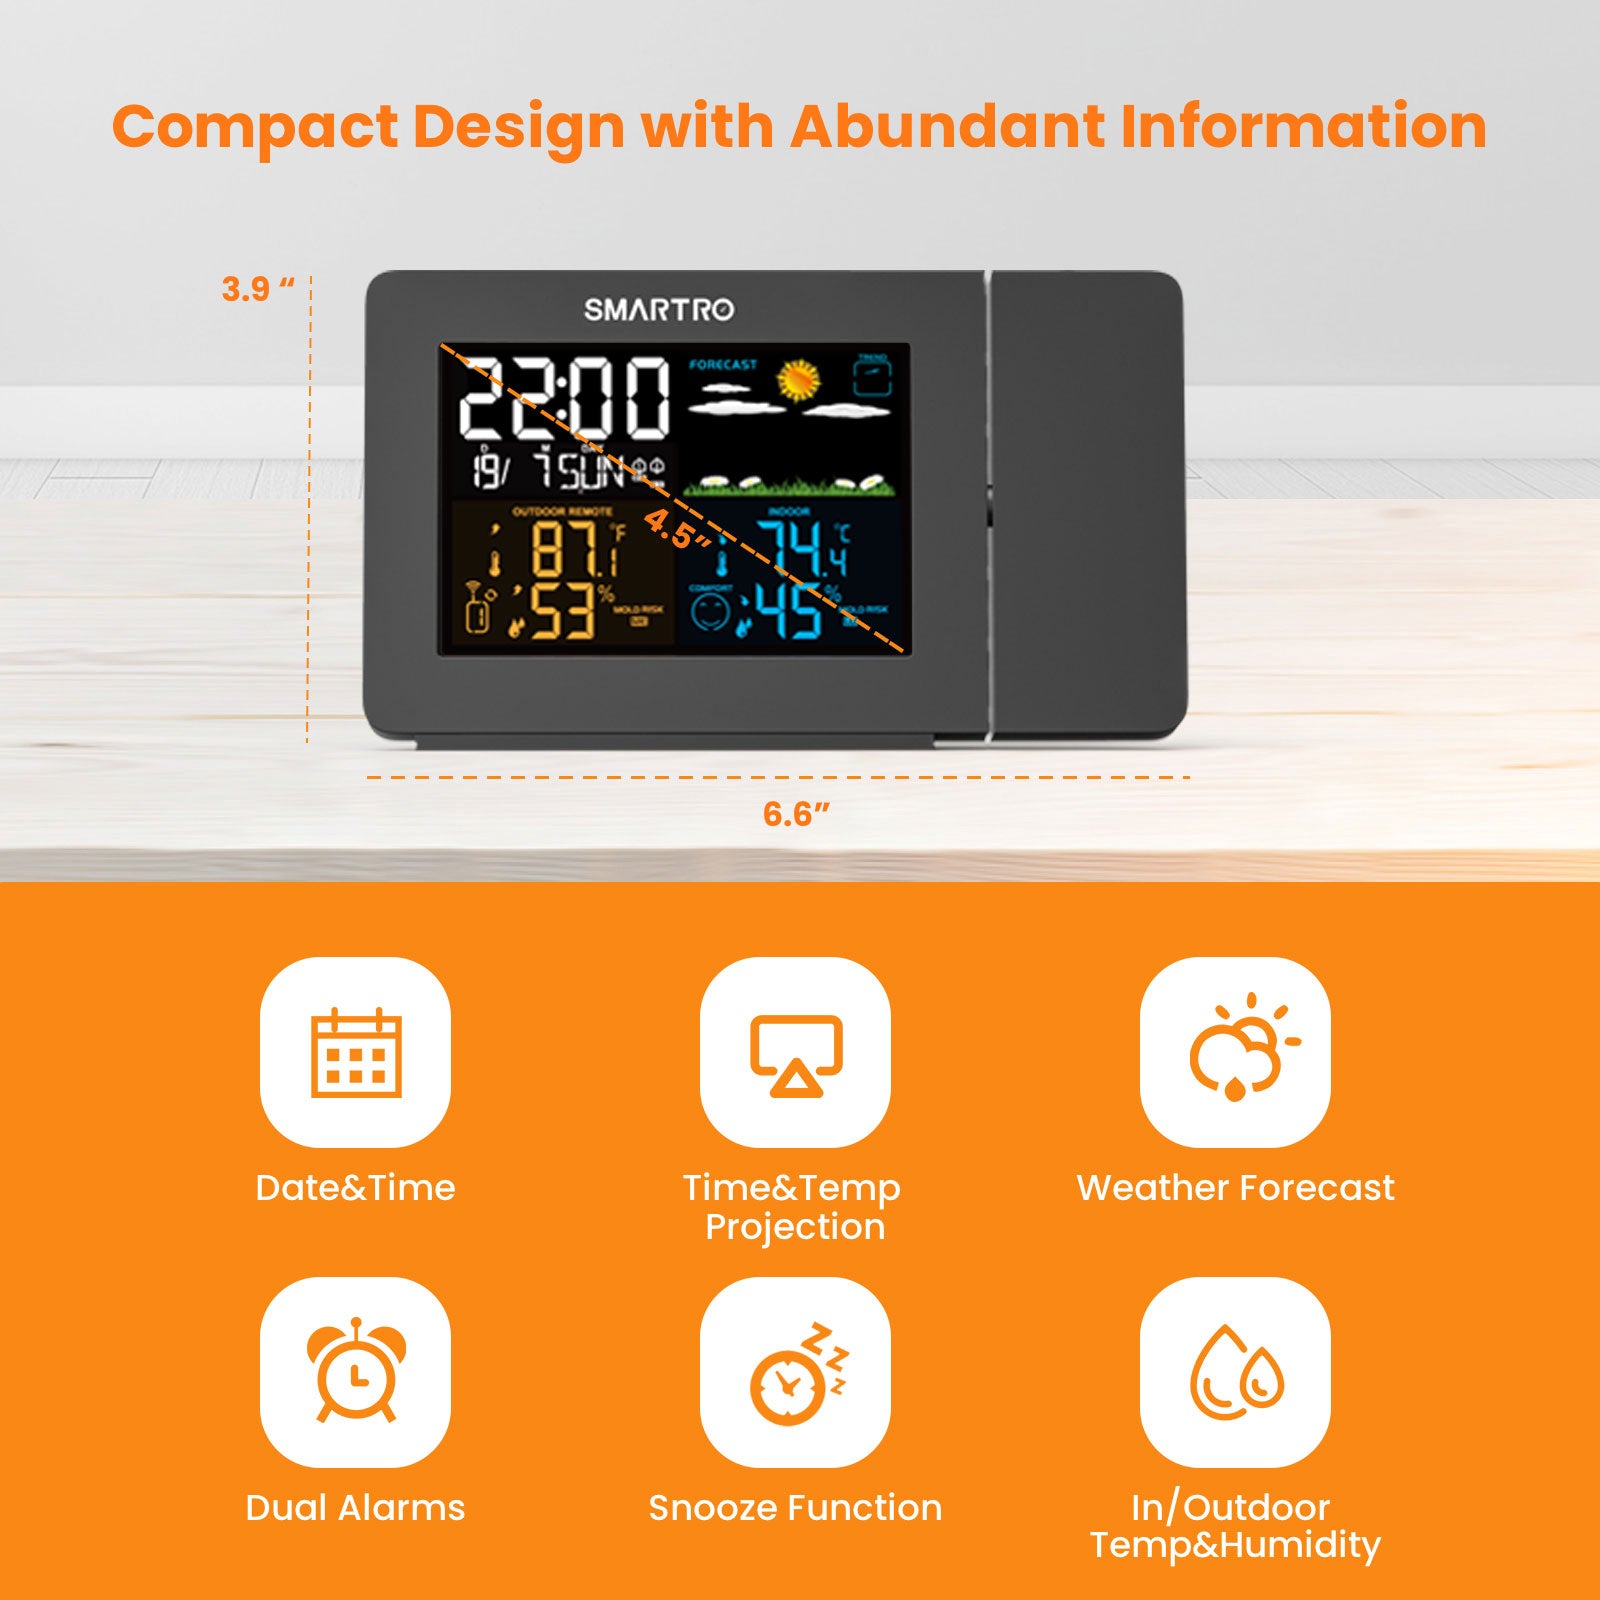 Talking Indoor/Outdoor Thermometer w/ Alarm Clock 